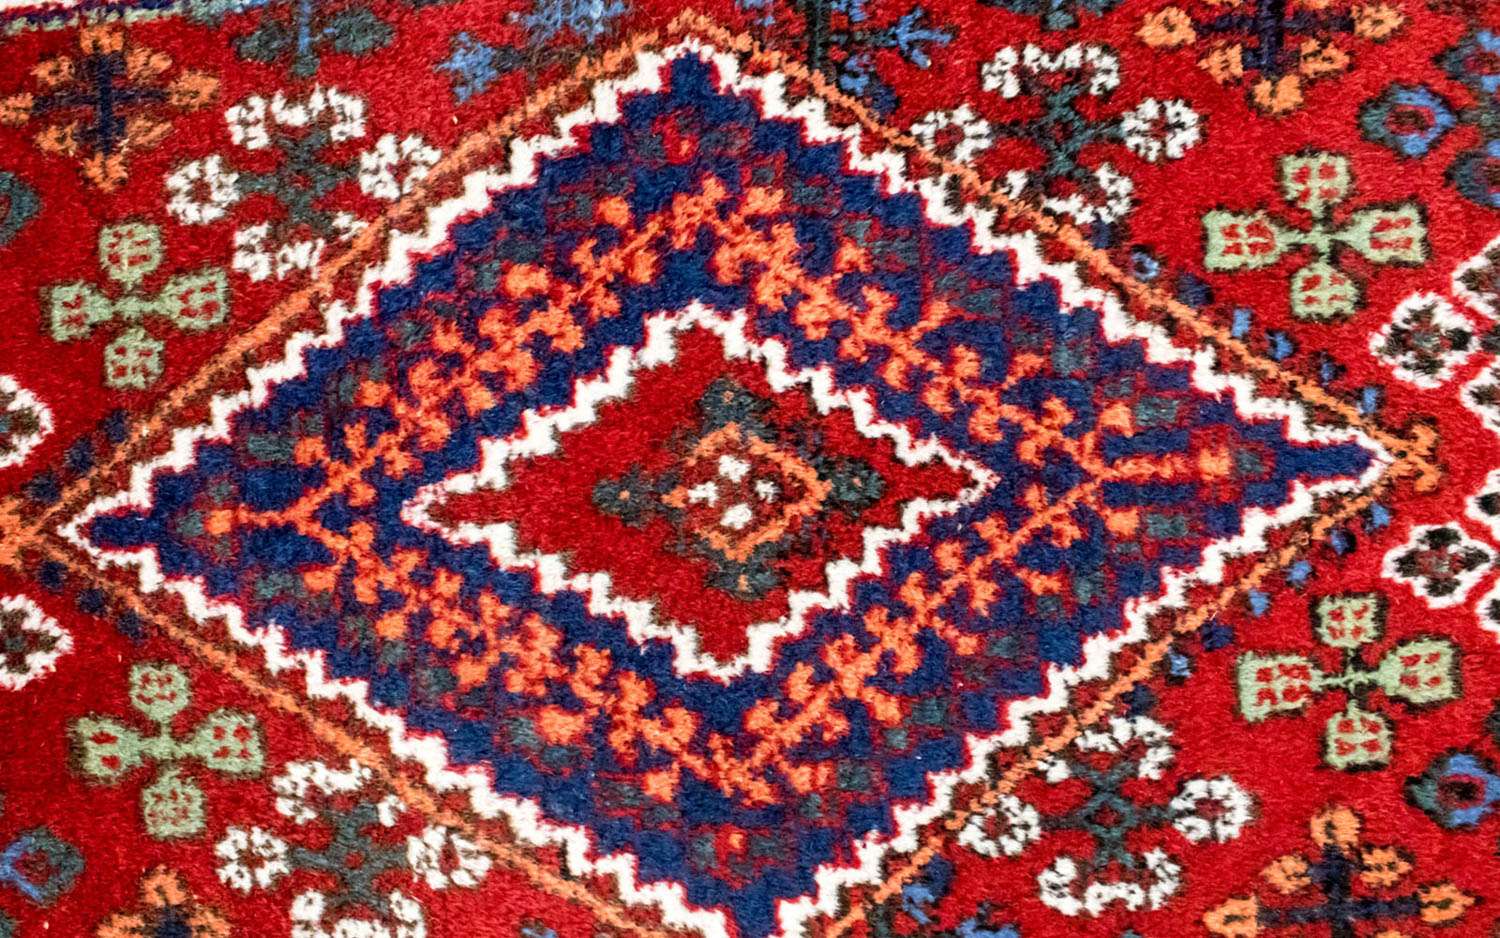 Runner Perský koberec - Nomádský - 163 x 57 cm - červená